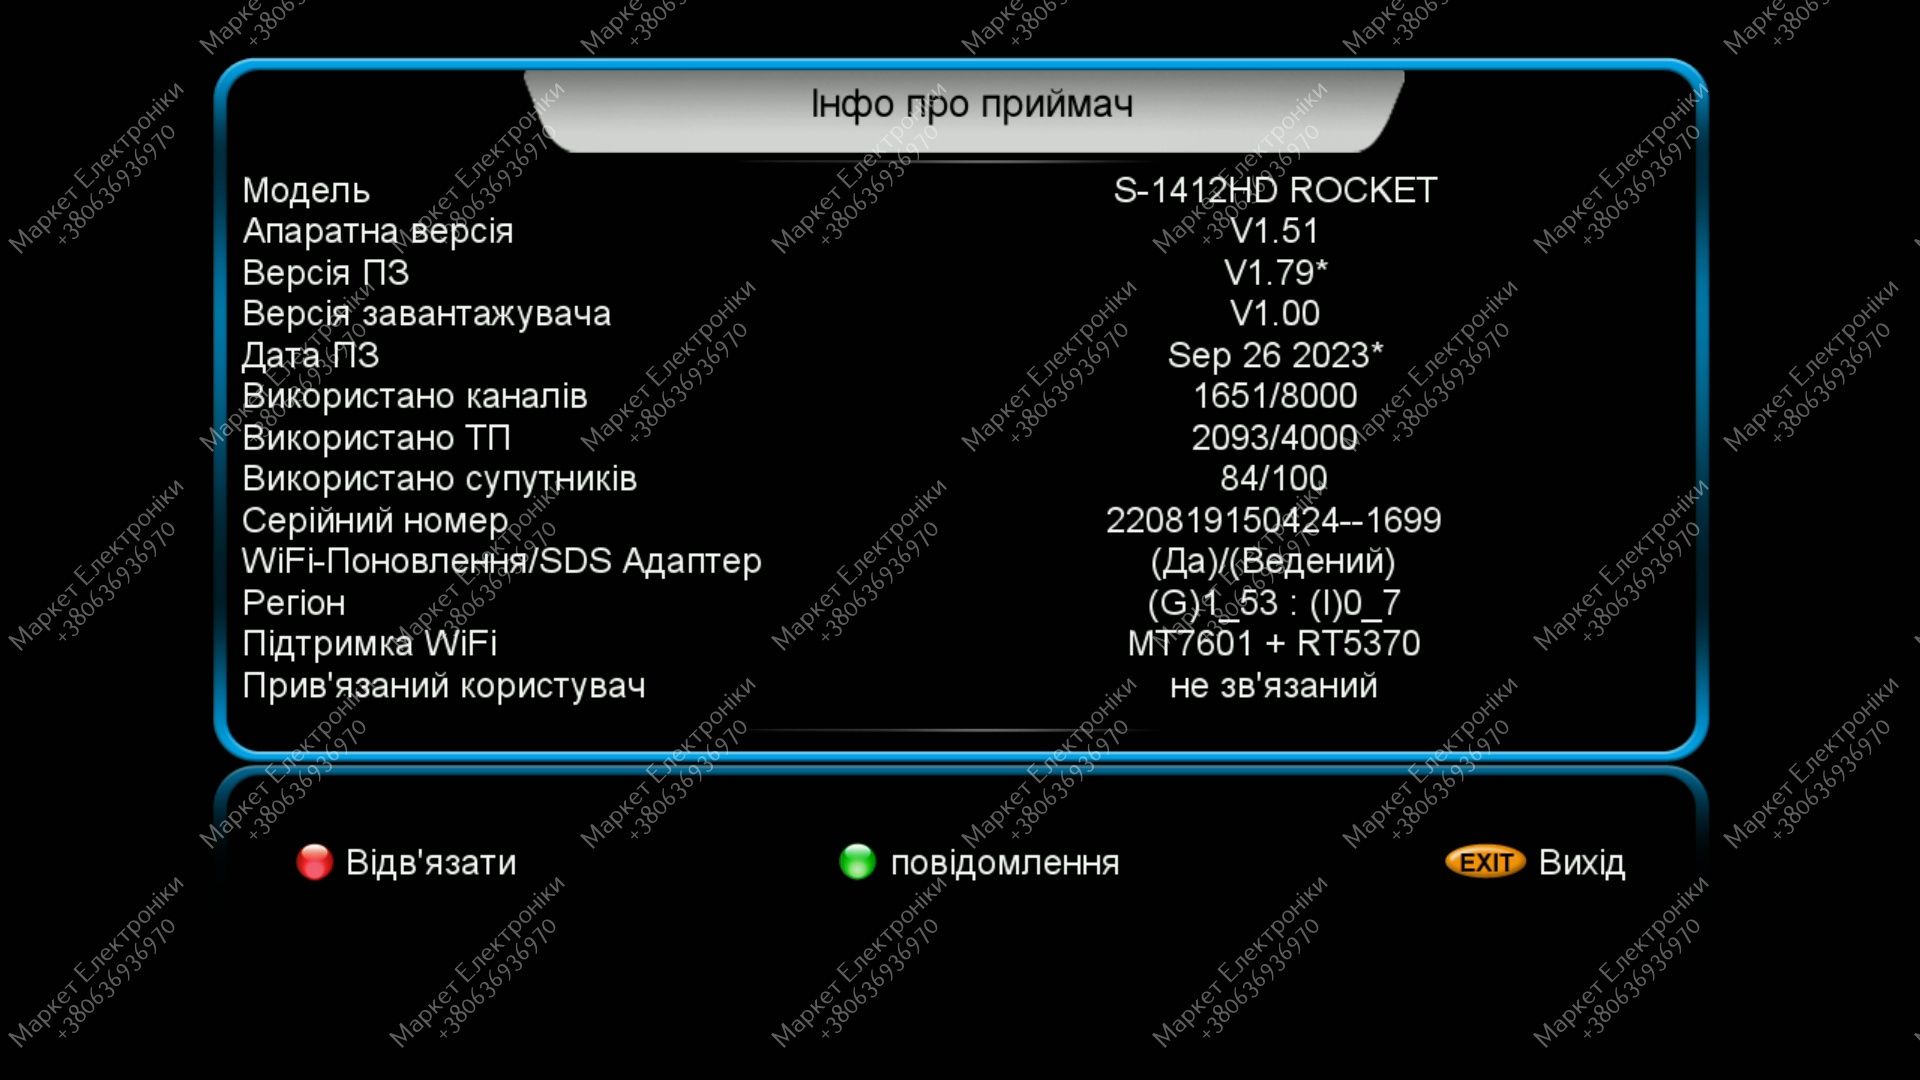 Sat-Integral S-1412 HD Rocket(41445)